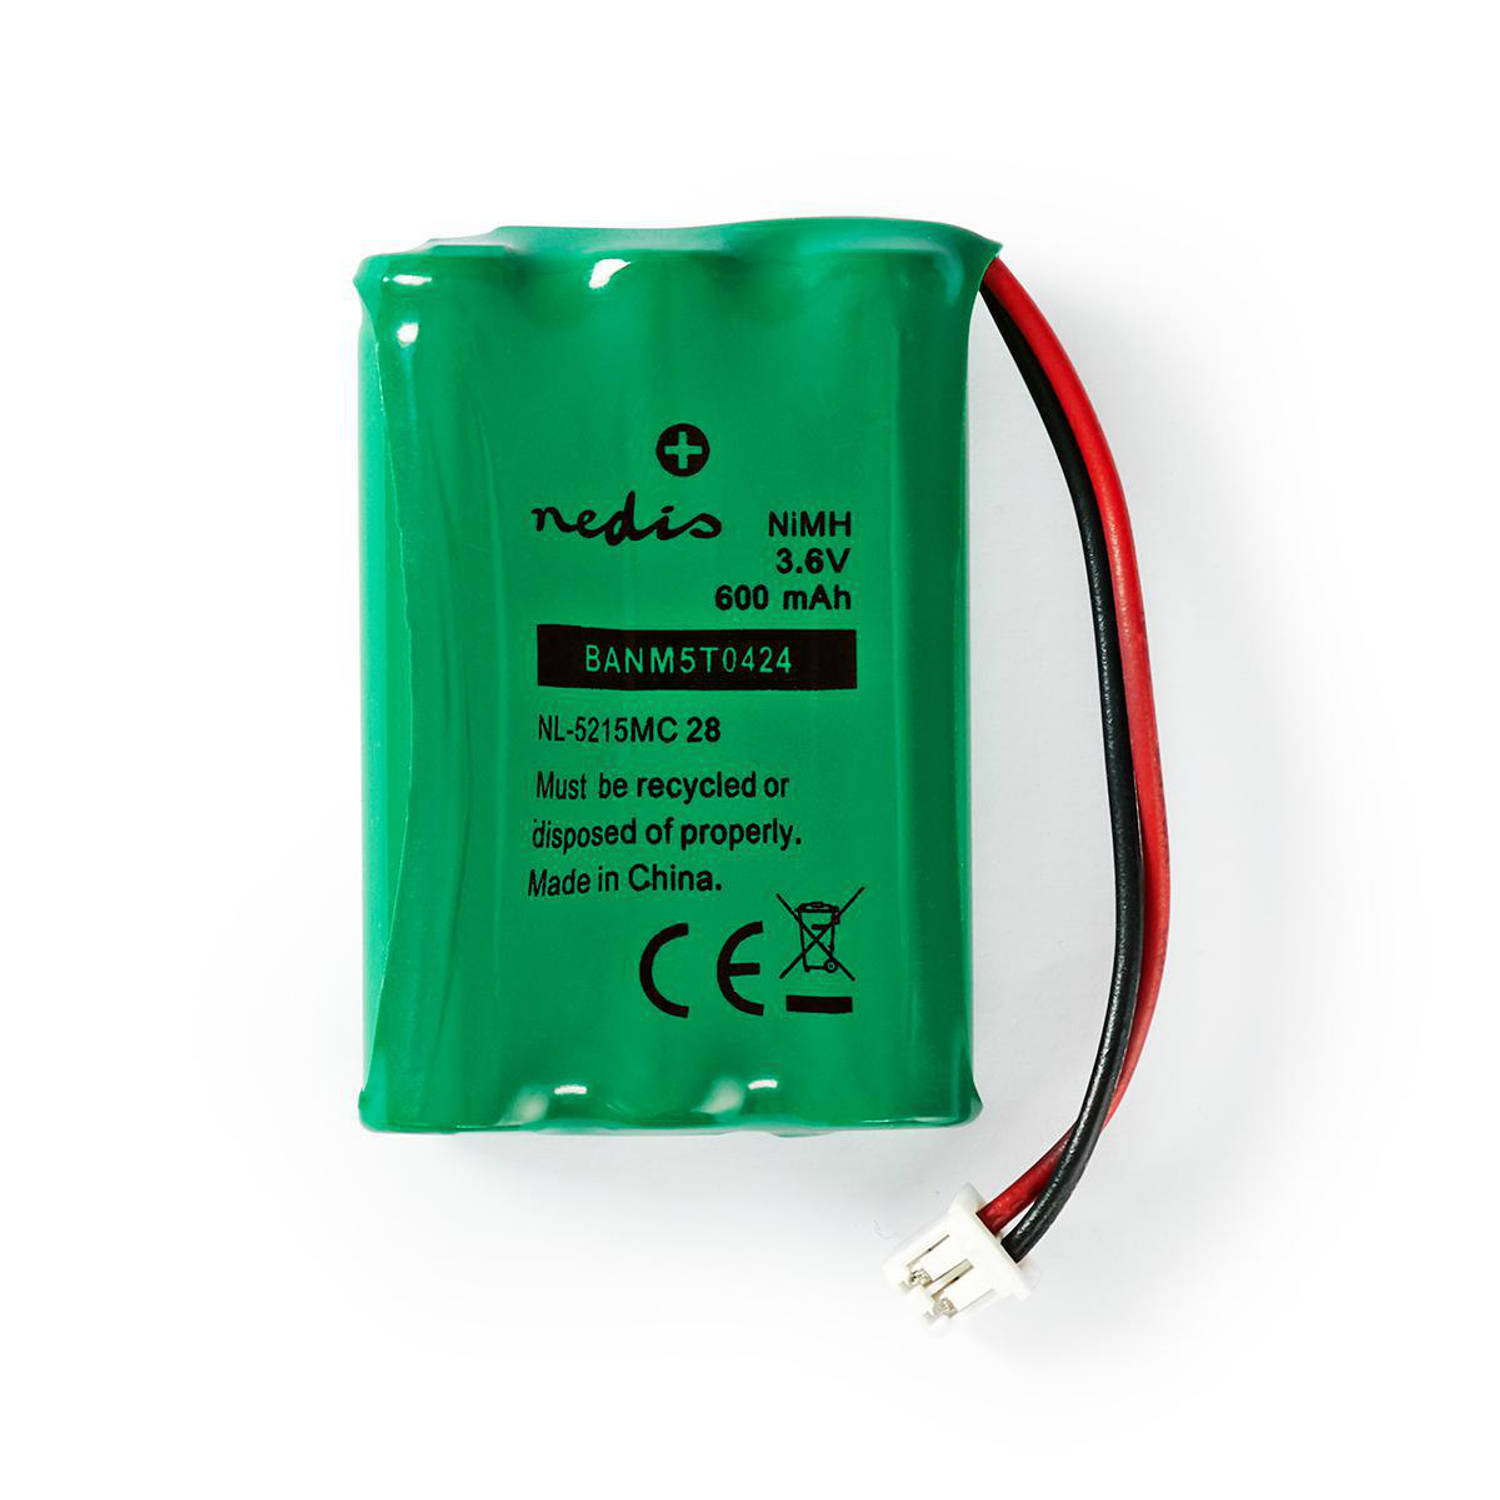 Nedis Oplaadbare NiMH-Batterij - BANM5T0424 - Groen